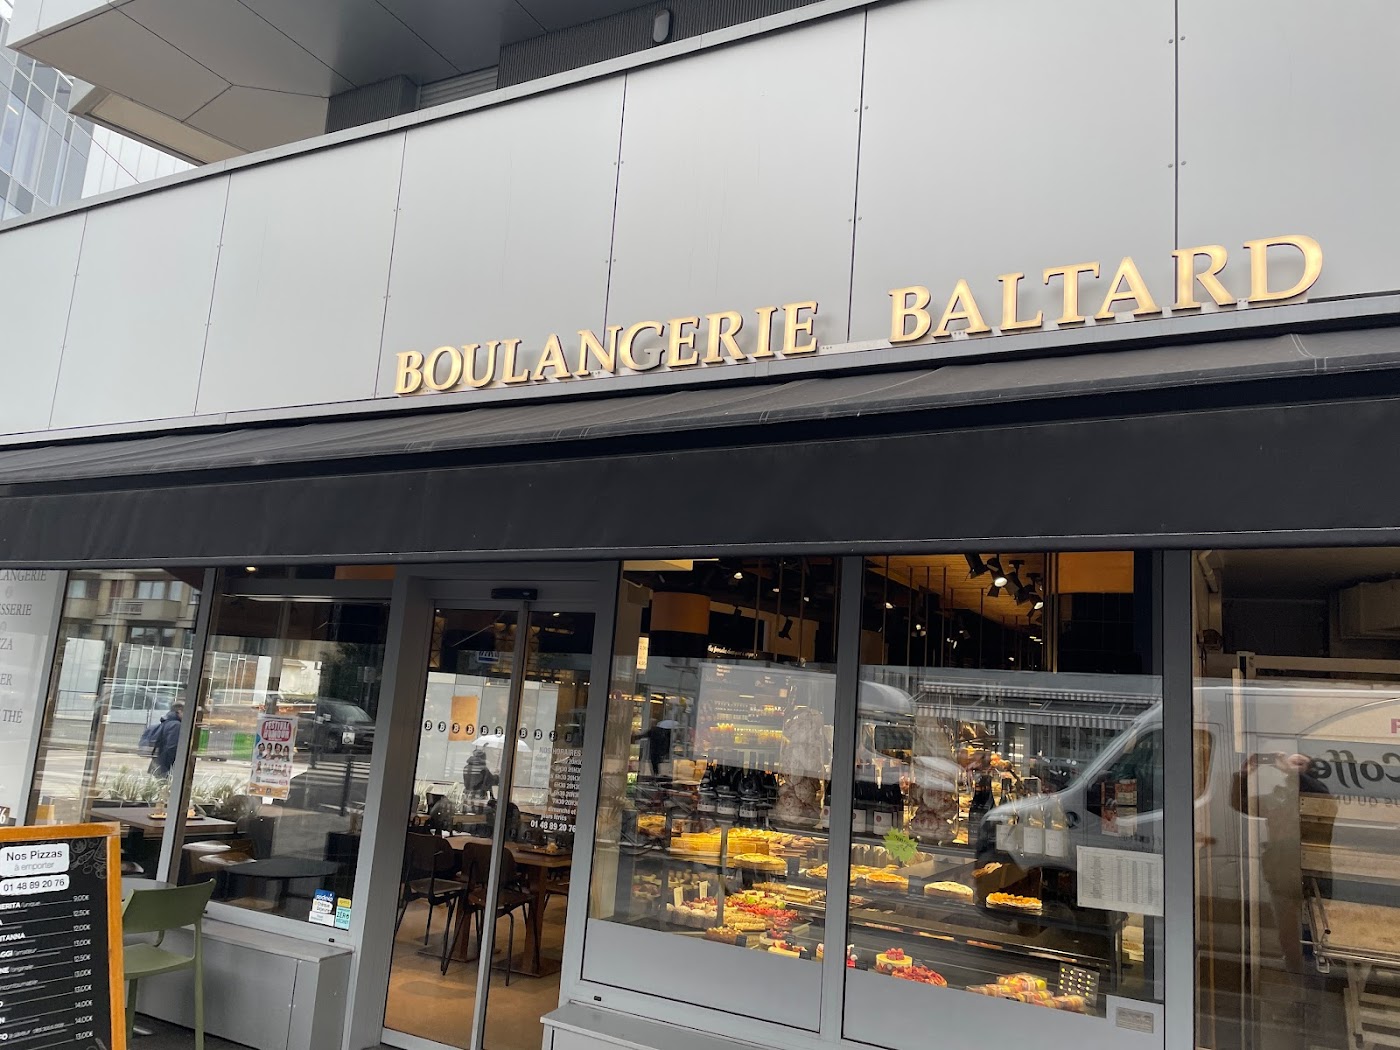 Boulangerie Baltard